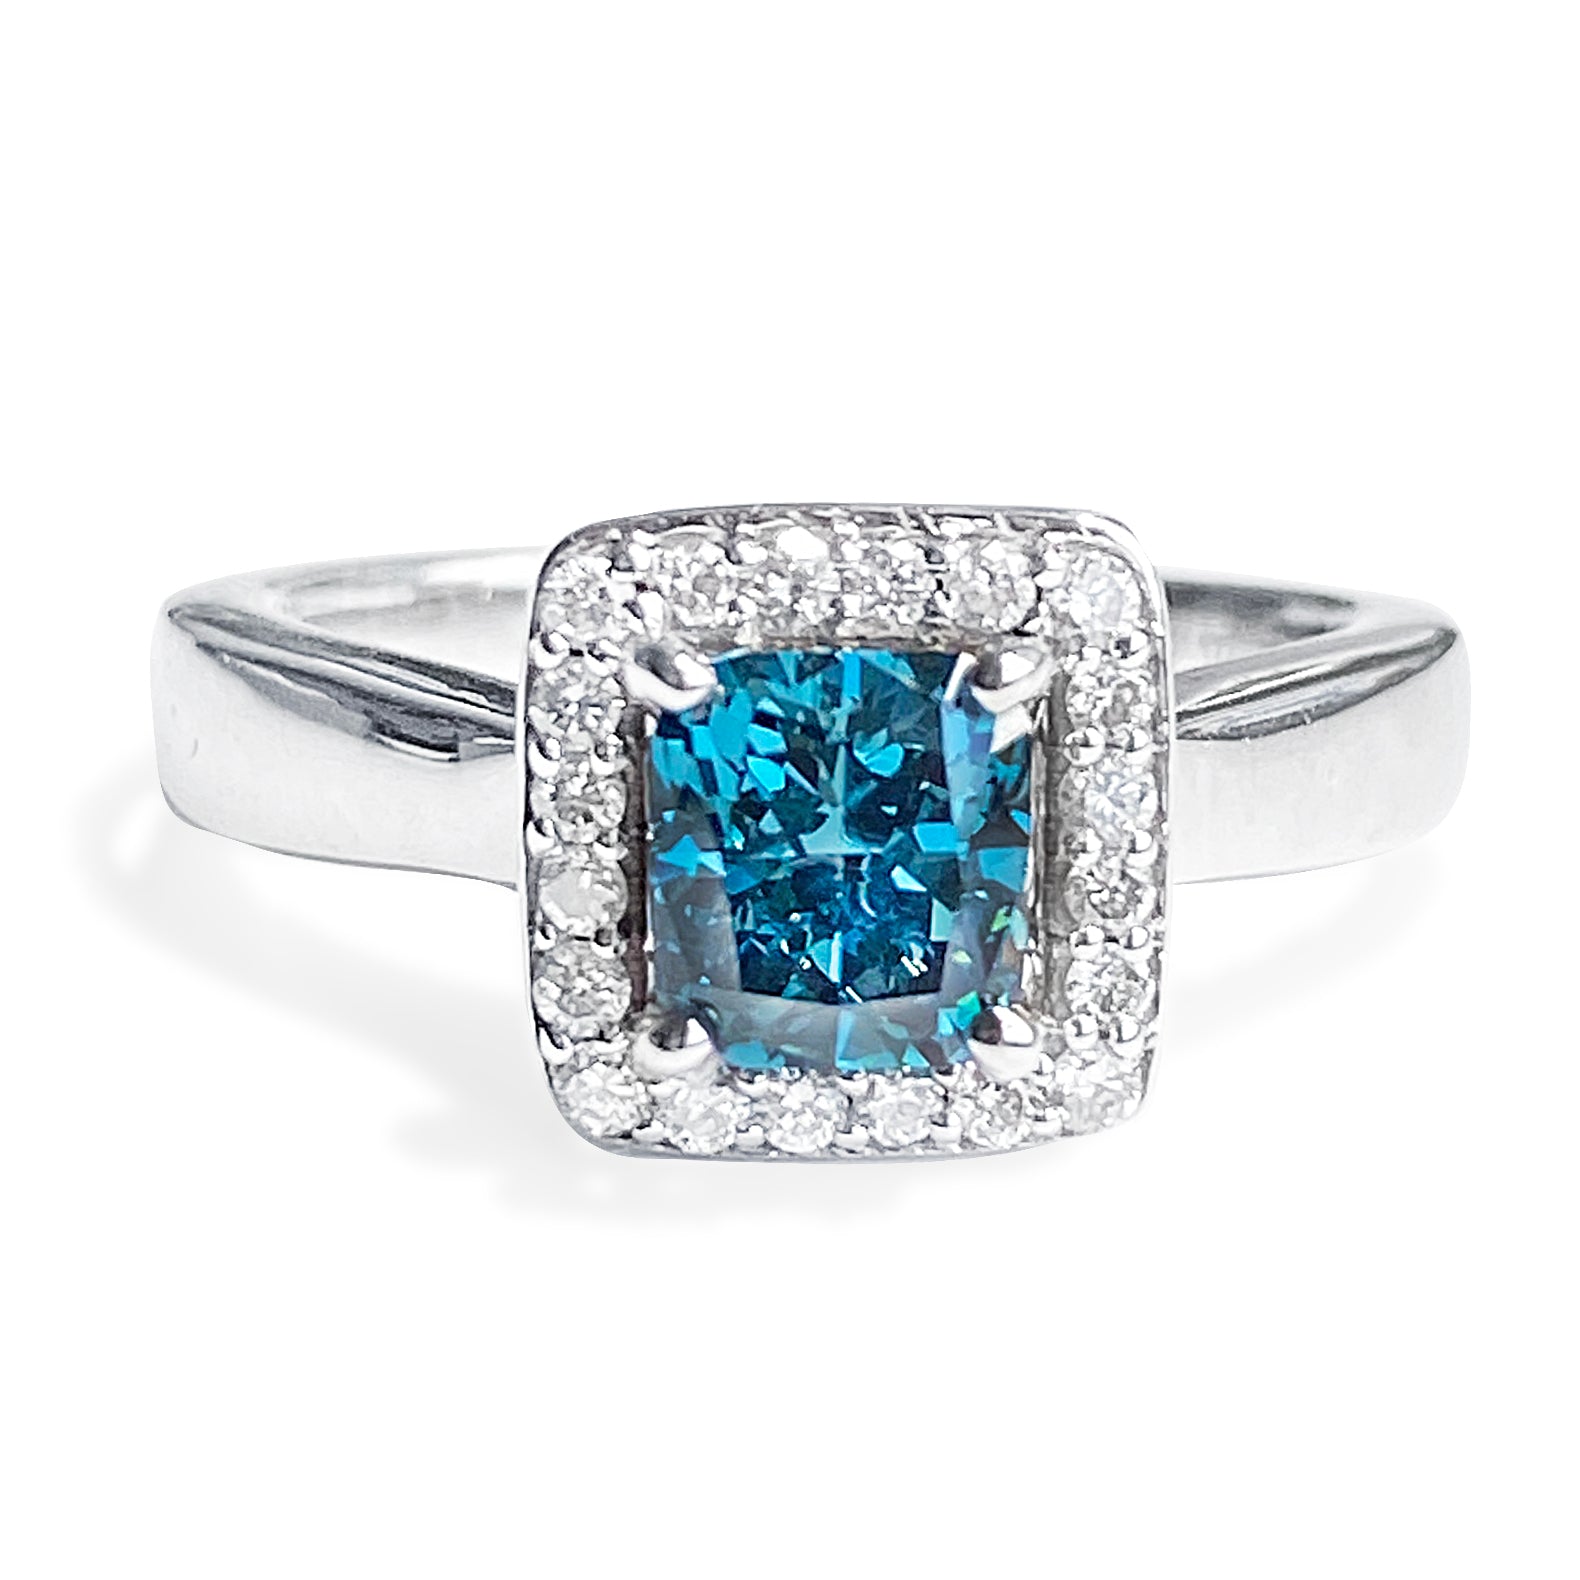 1.11 Carat Fancy Blue Cushion Diamond Halo Ring